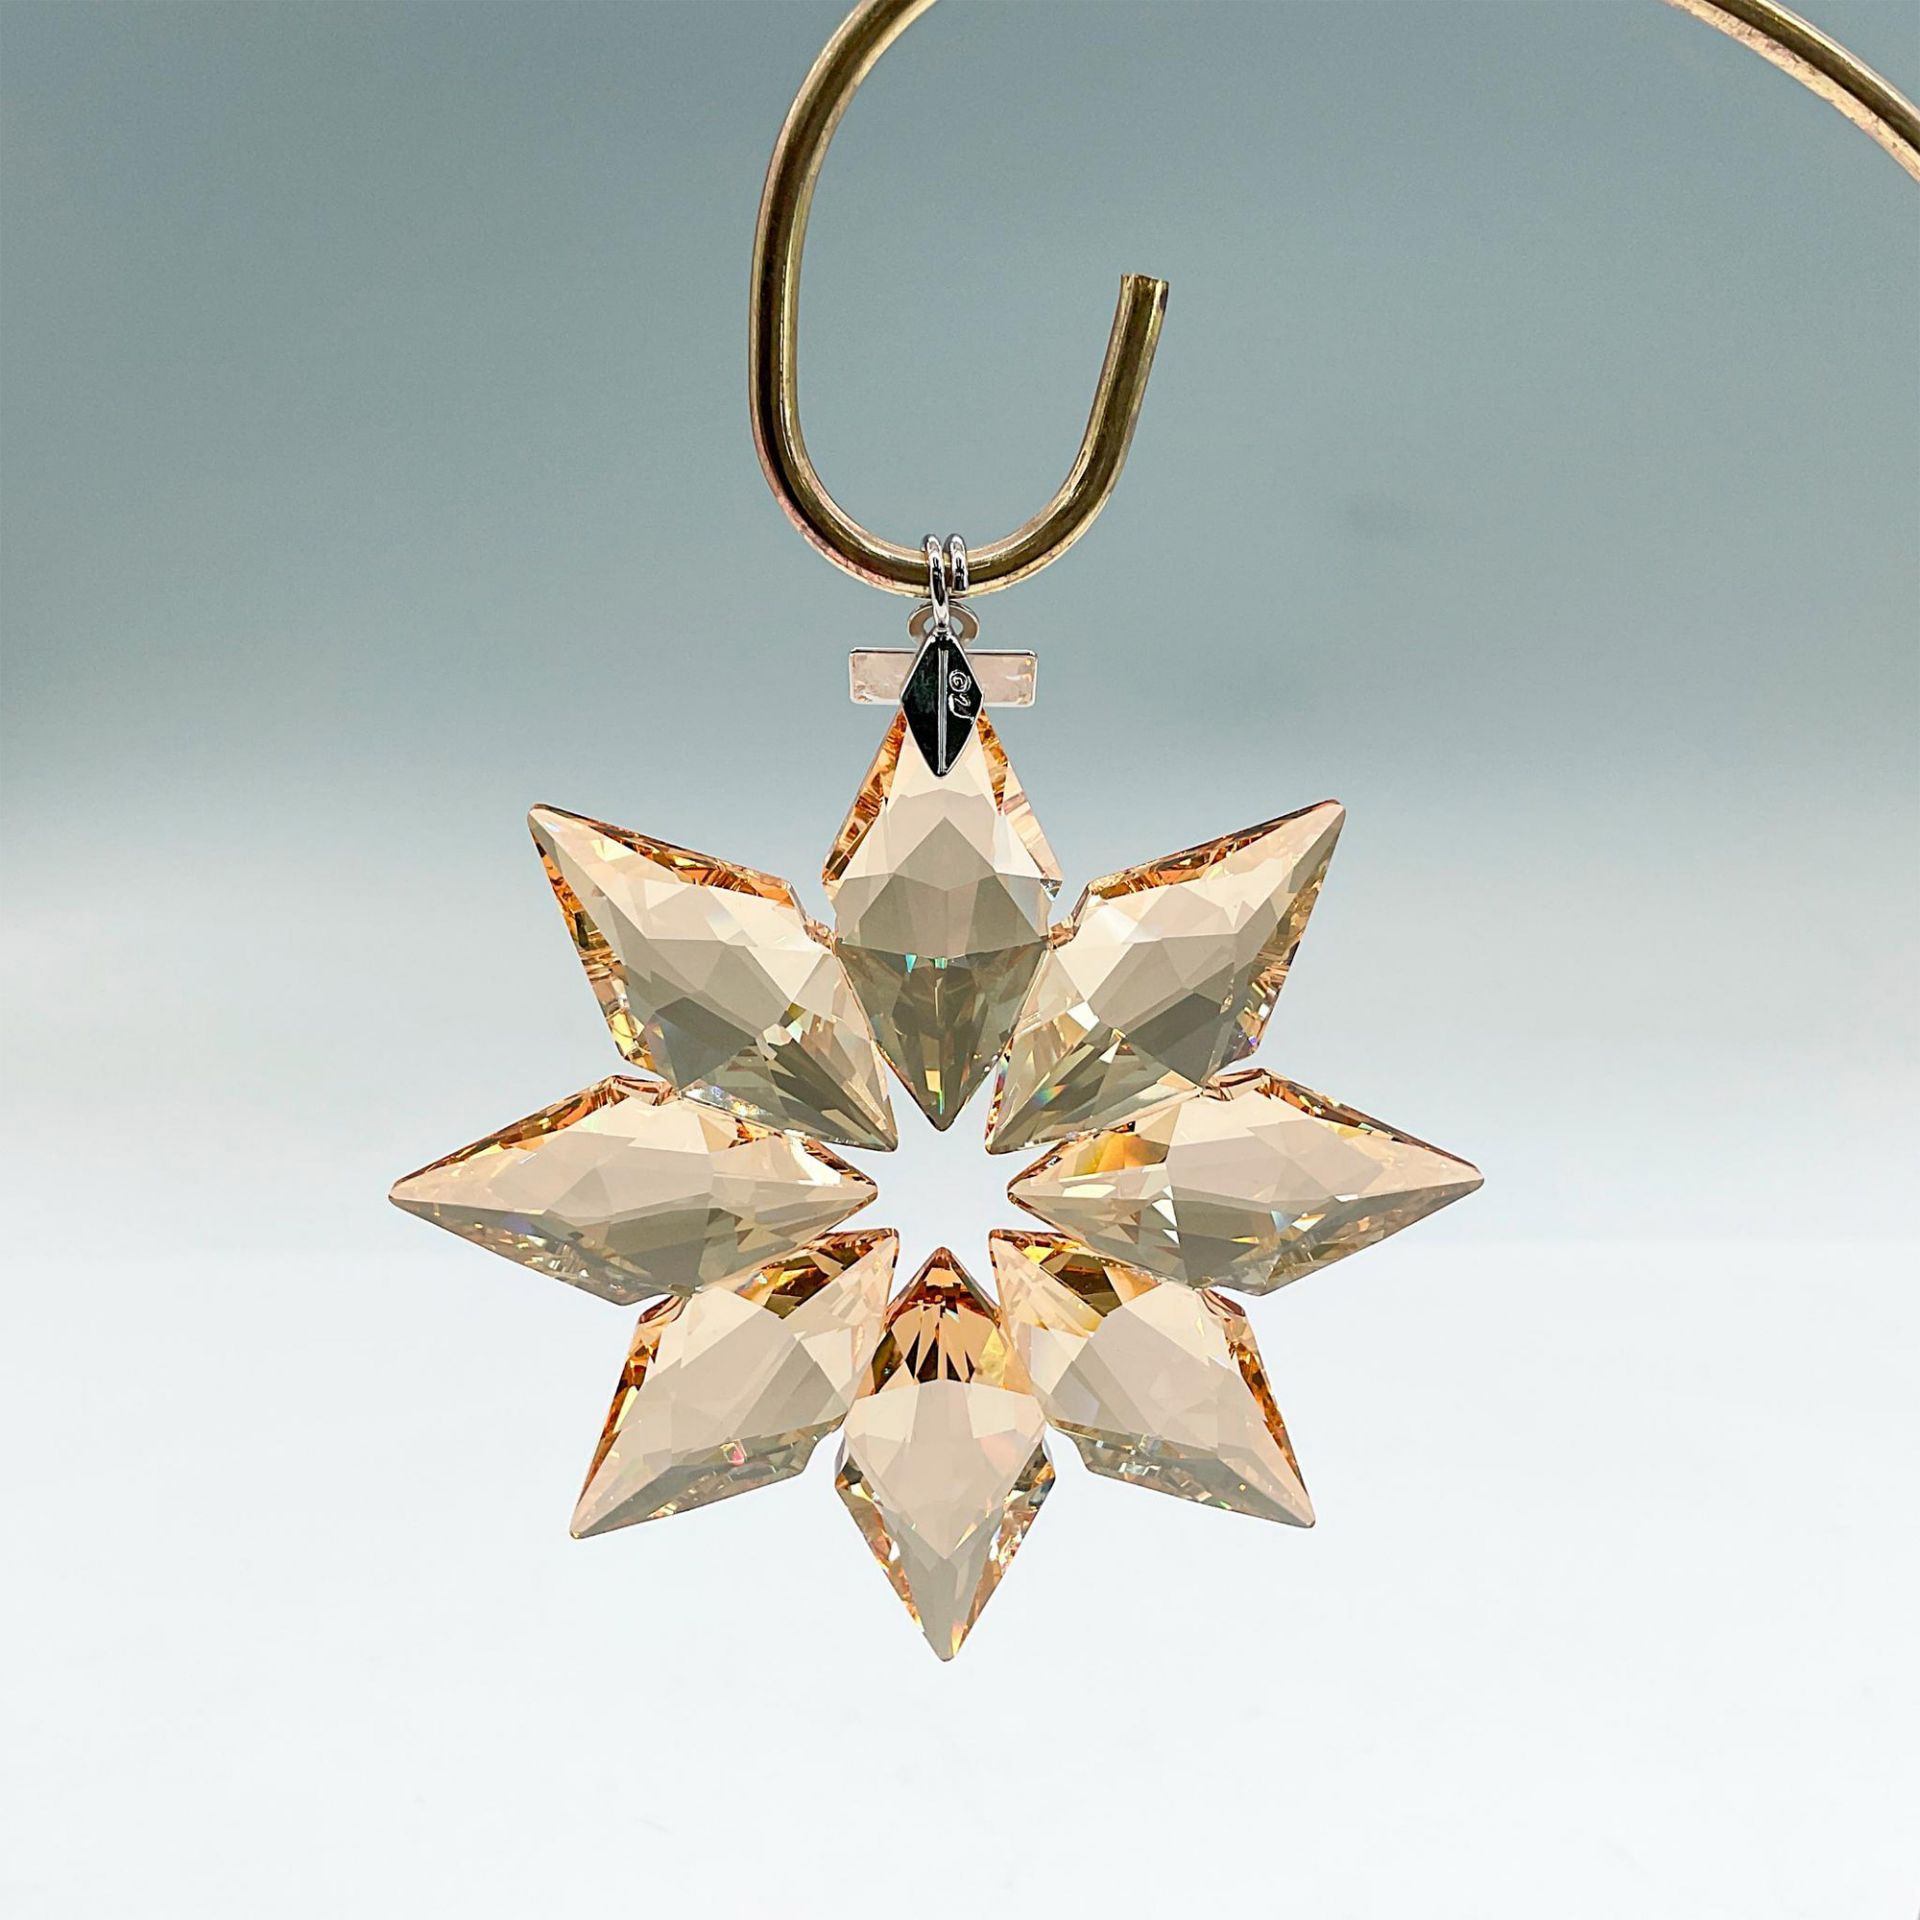 Swarovski Crystal SCS Gold Christmas Ornament 2013 - Image 2 of 3